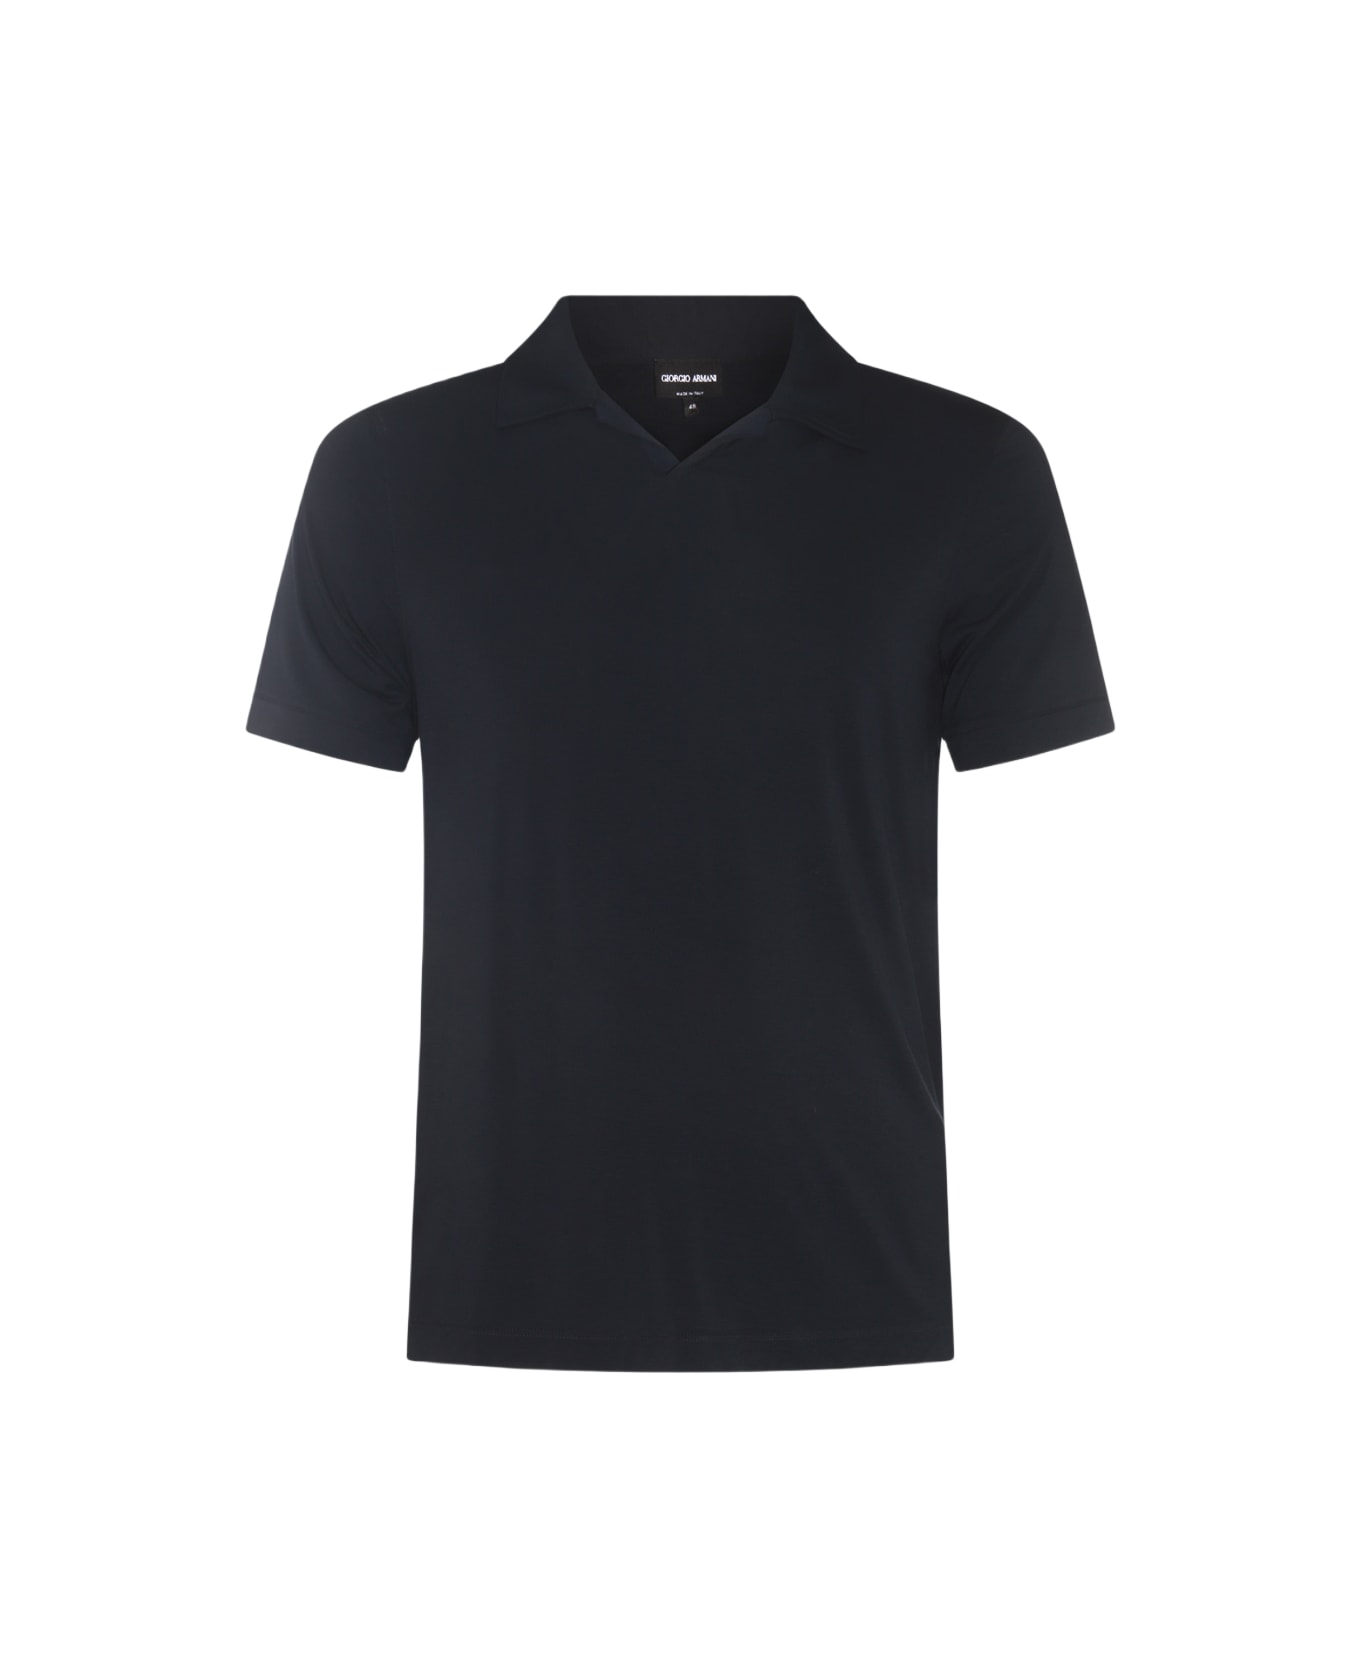 Giorgio Armani Black Viscose Polo Shirt